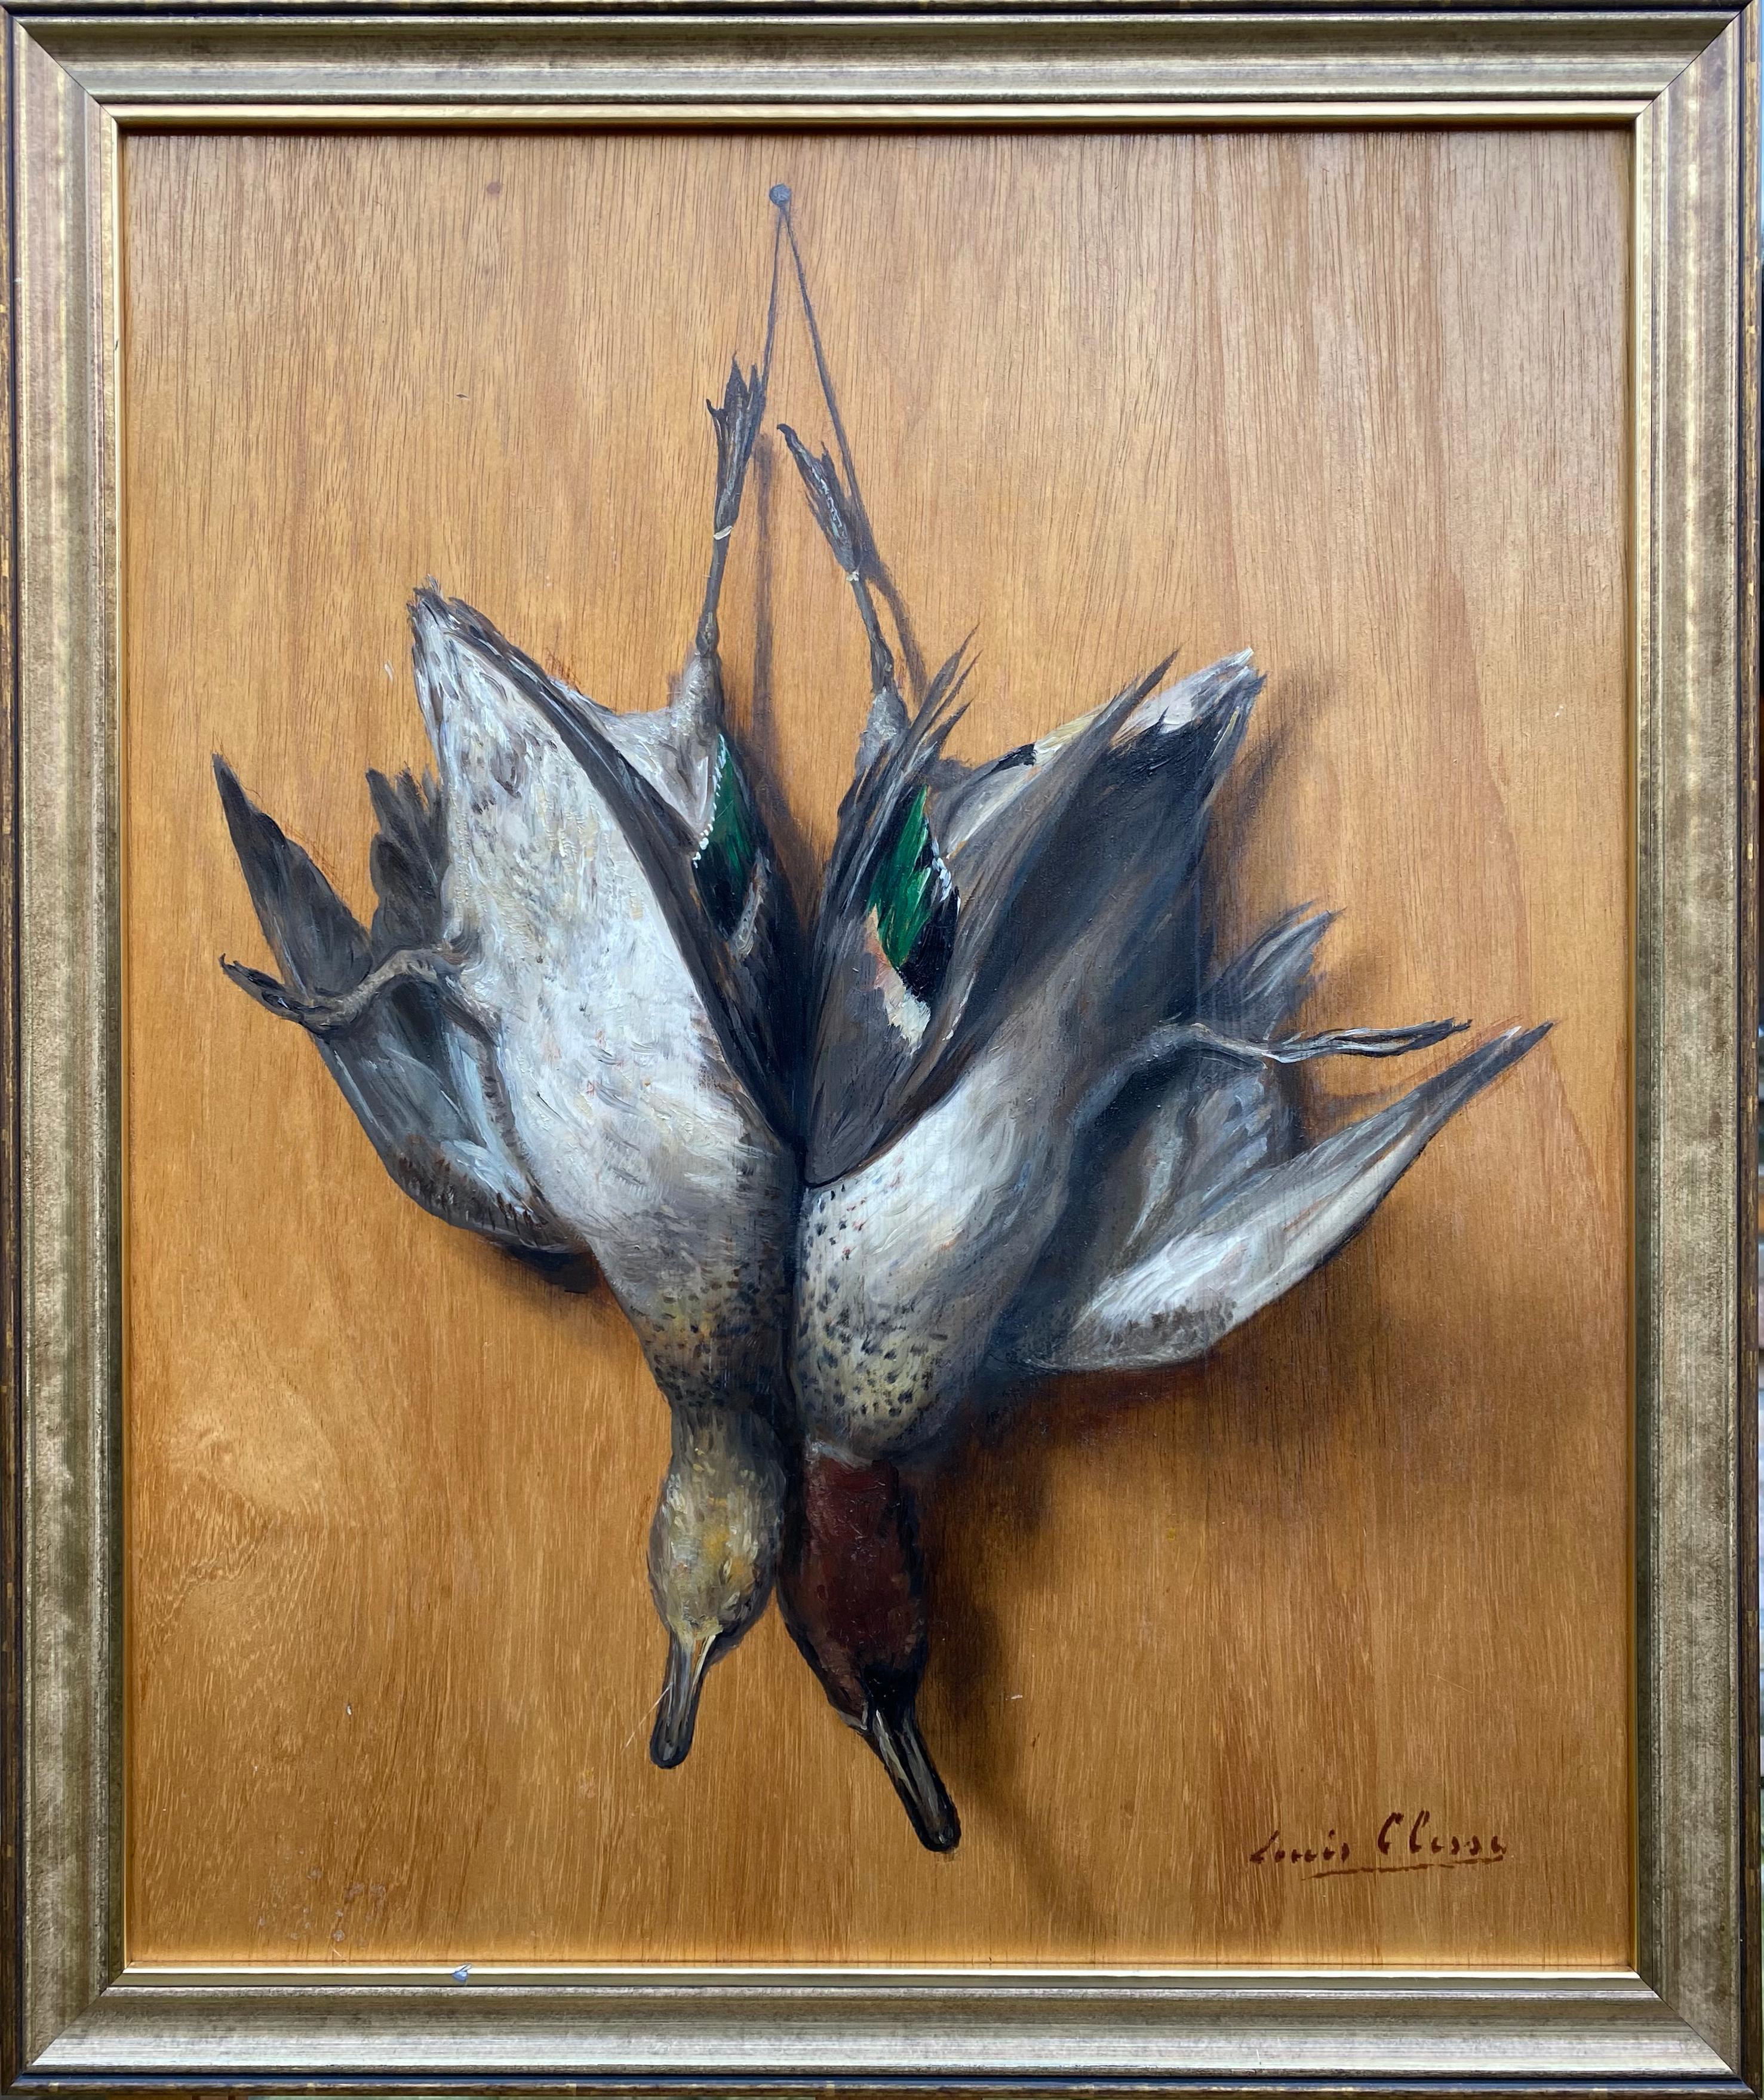 Trompe L’Oeil of Two Ducks, Louis Clesse, Brussels 1889 – 1961, Belgian Painter